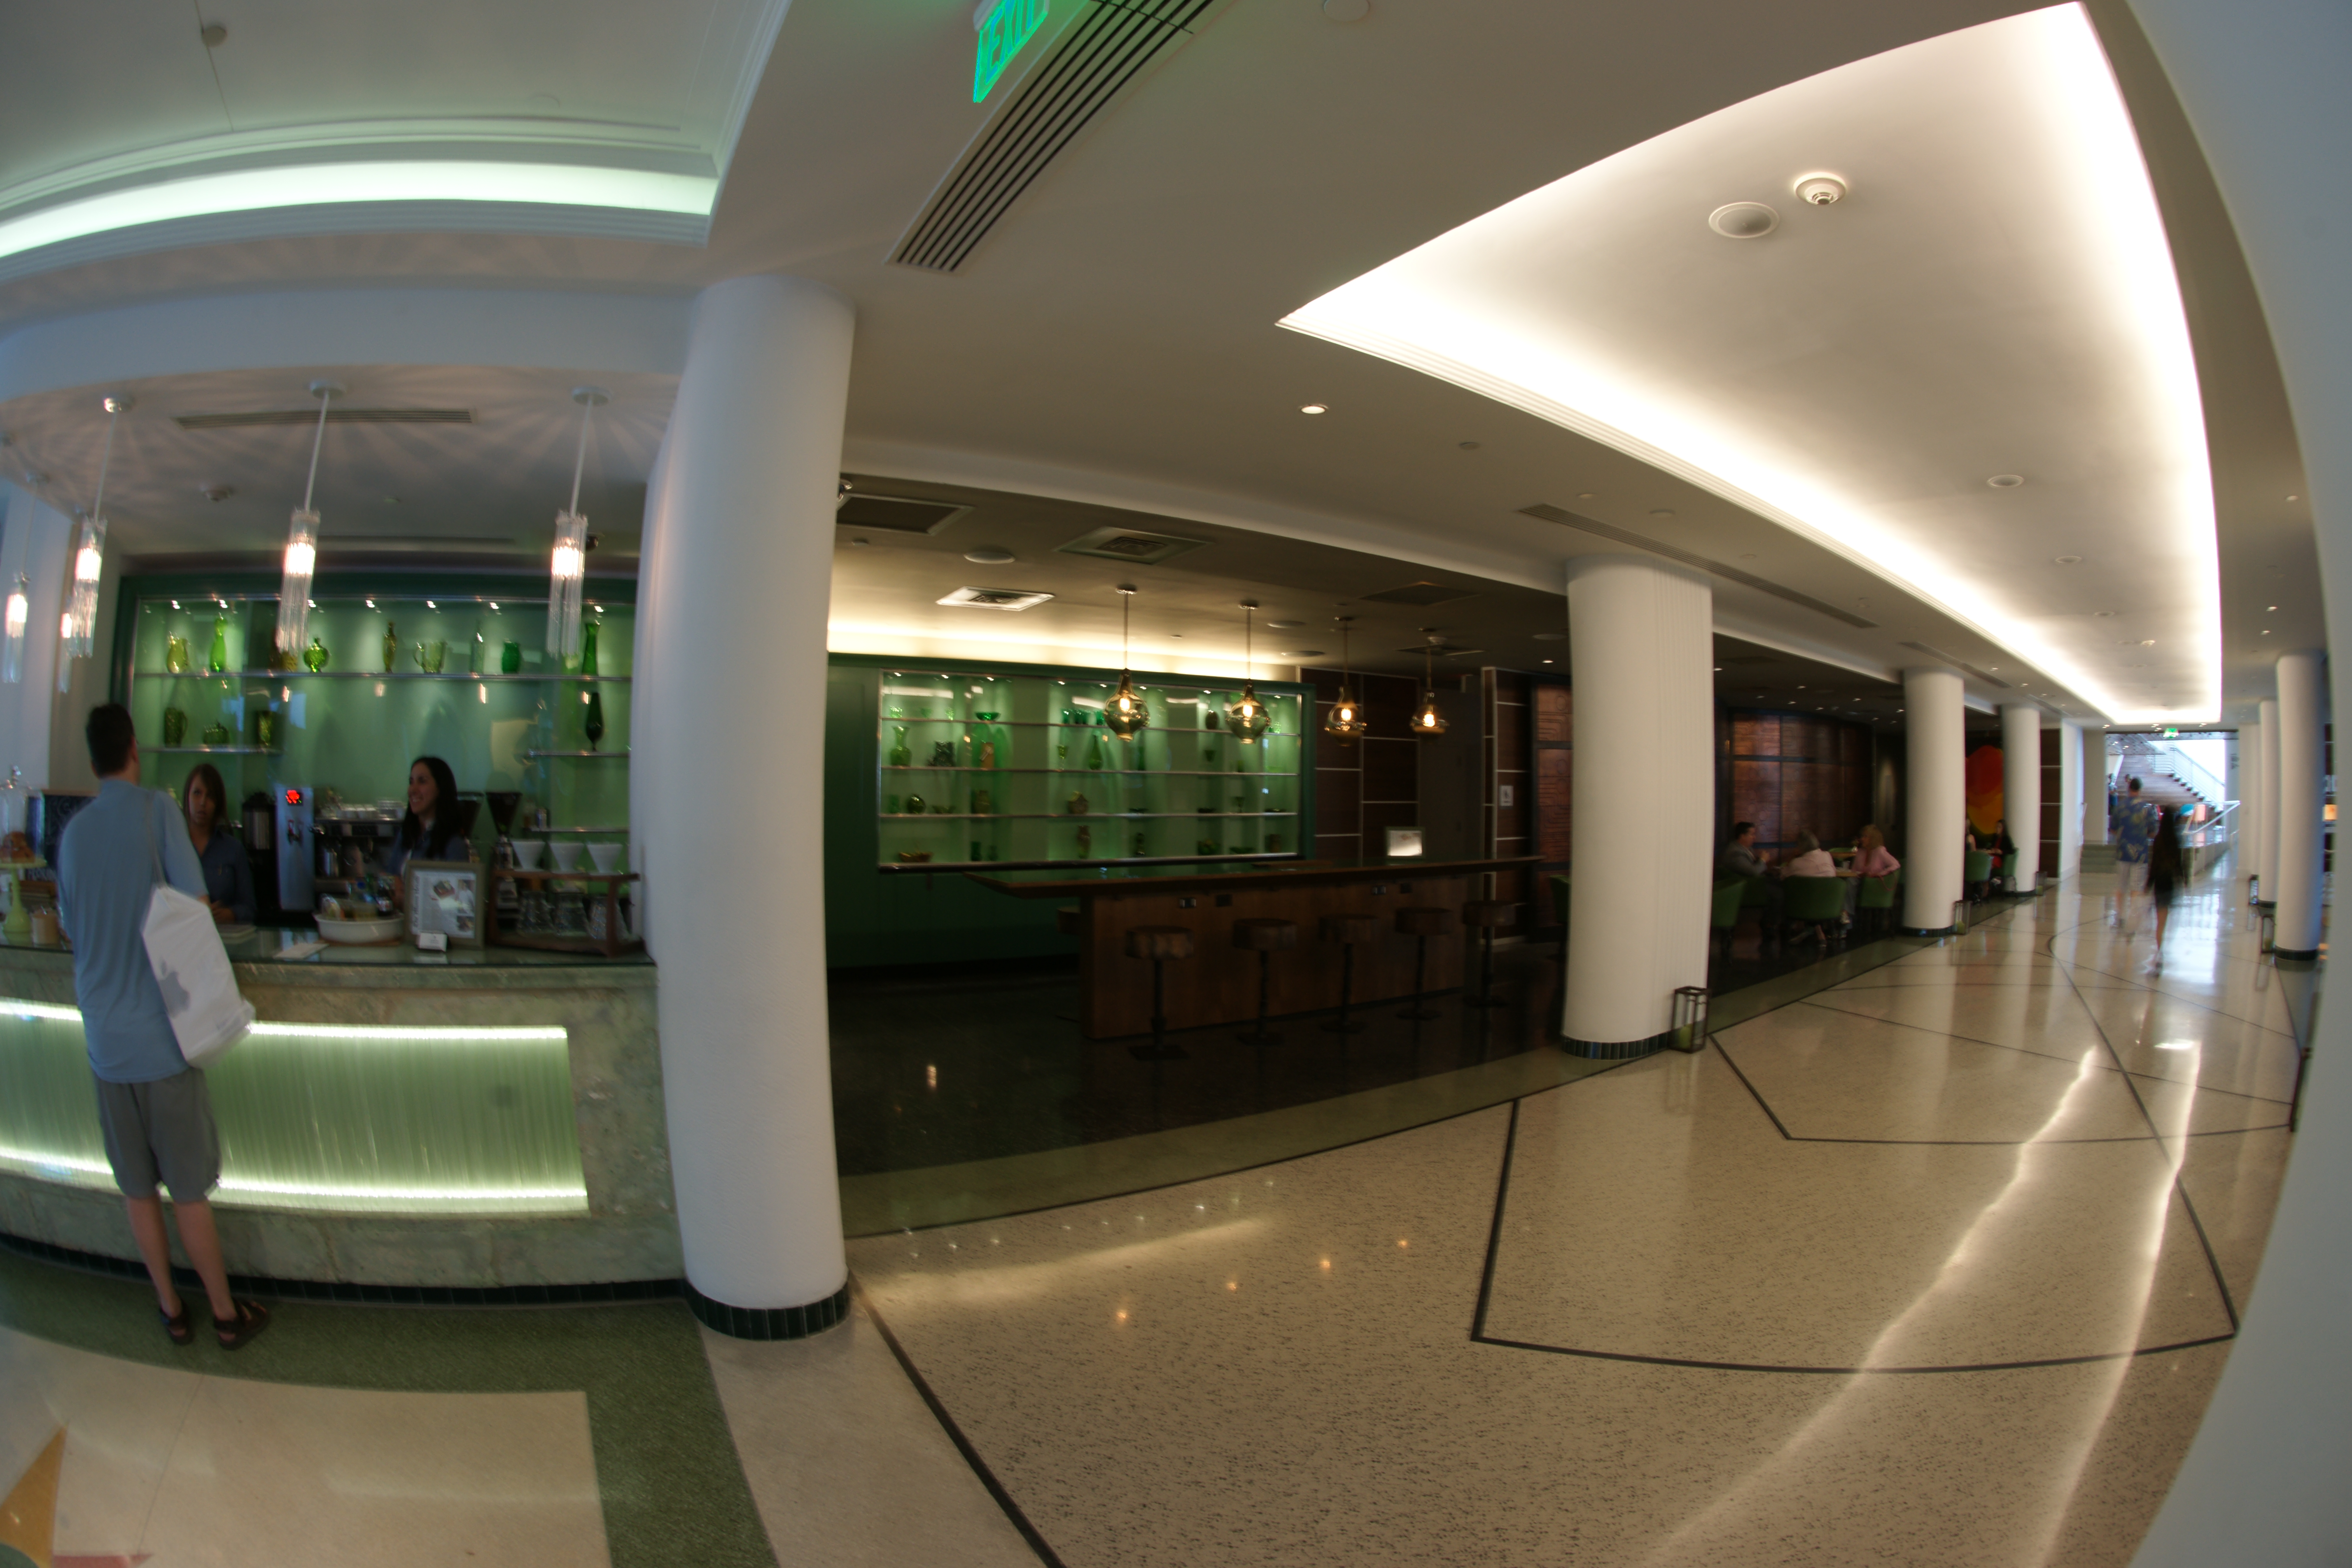 James Royal Palms Hotel Lobby with Terrazzo Flooring